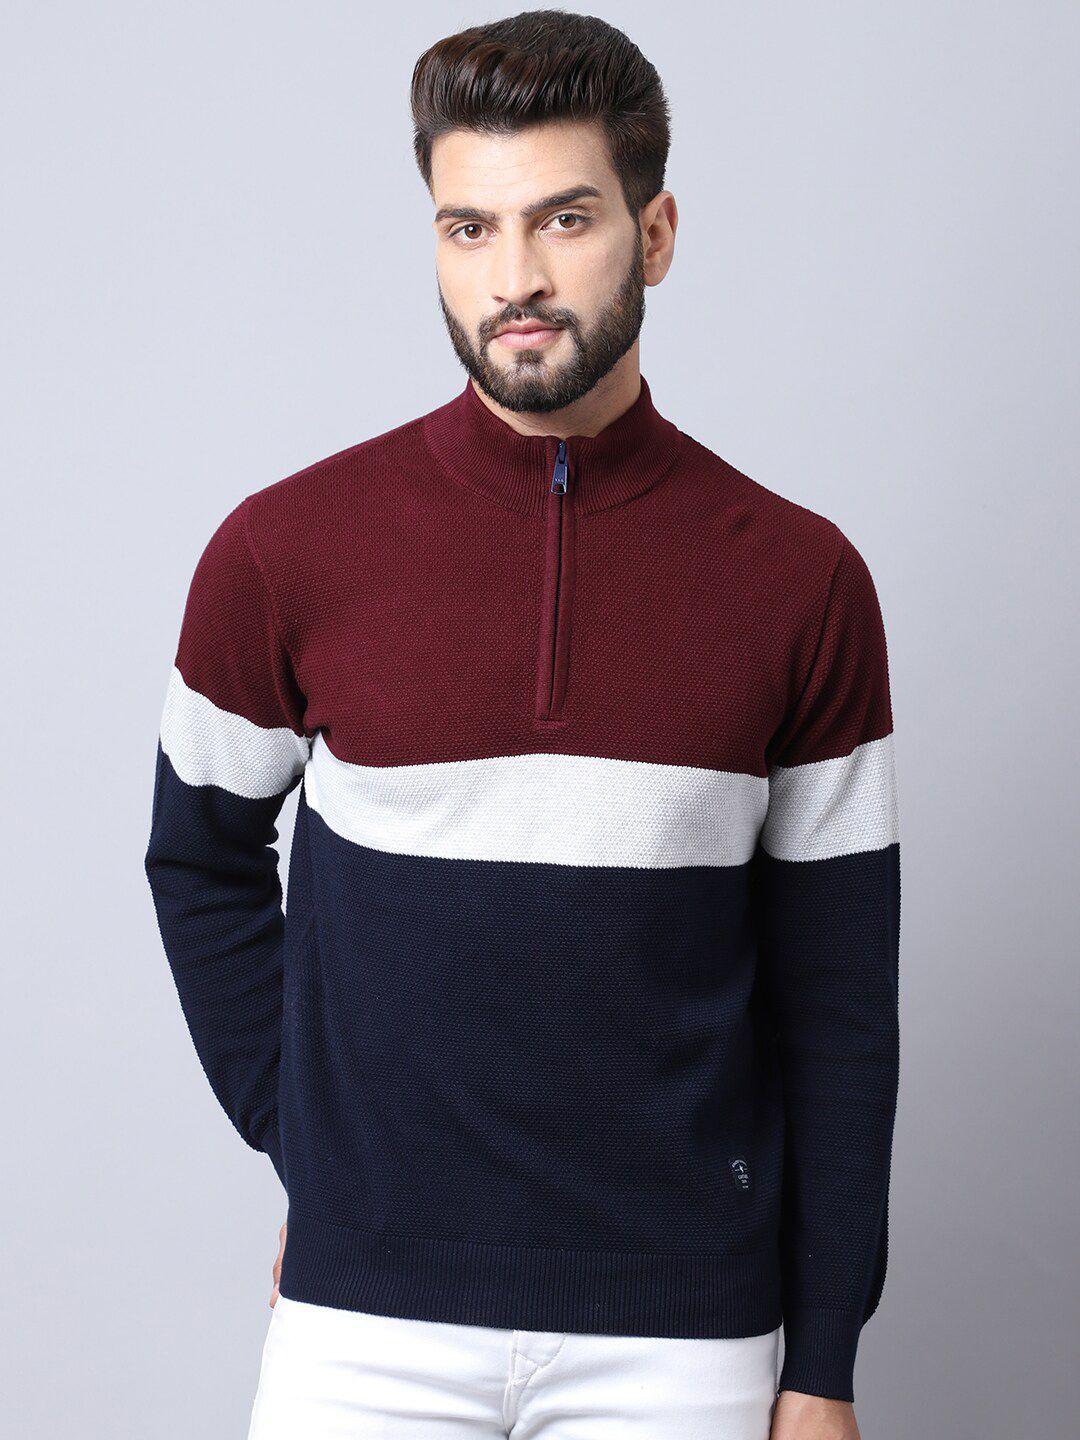 cantabil men navy blue & maroon colourblocked pullover with zip detail